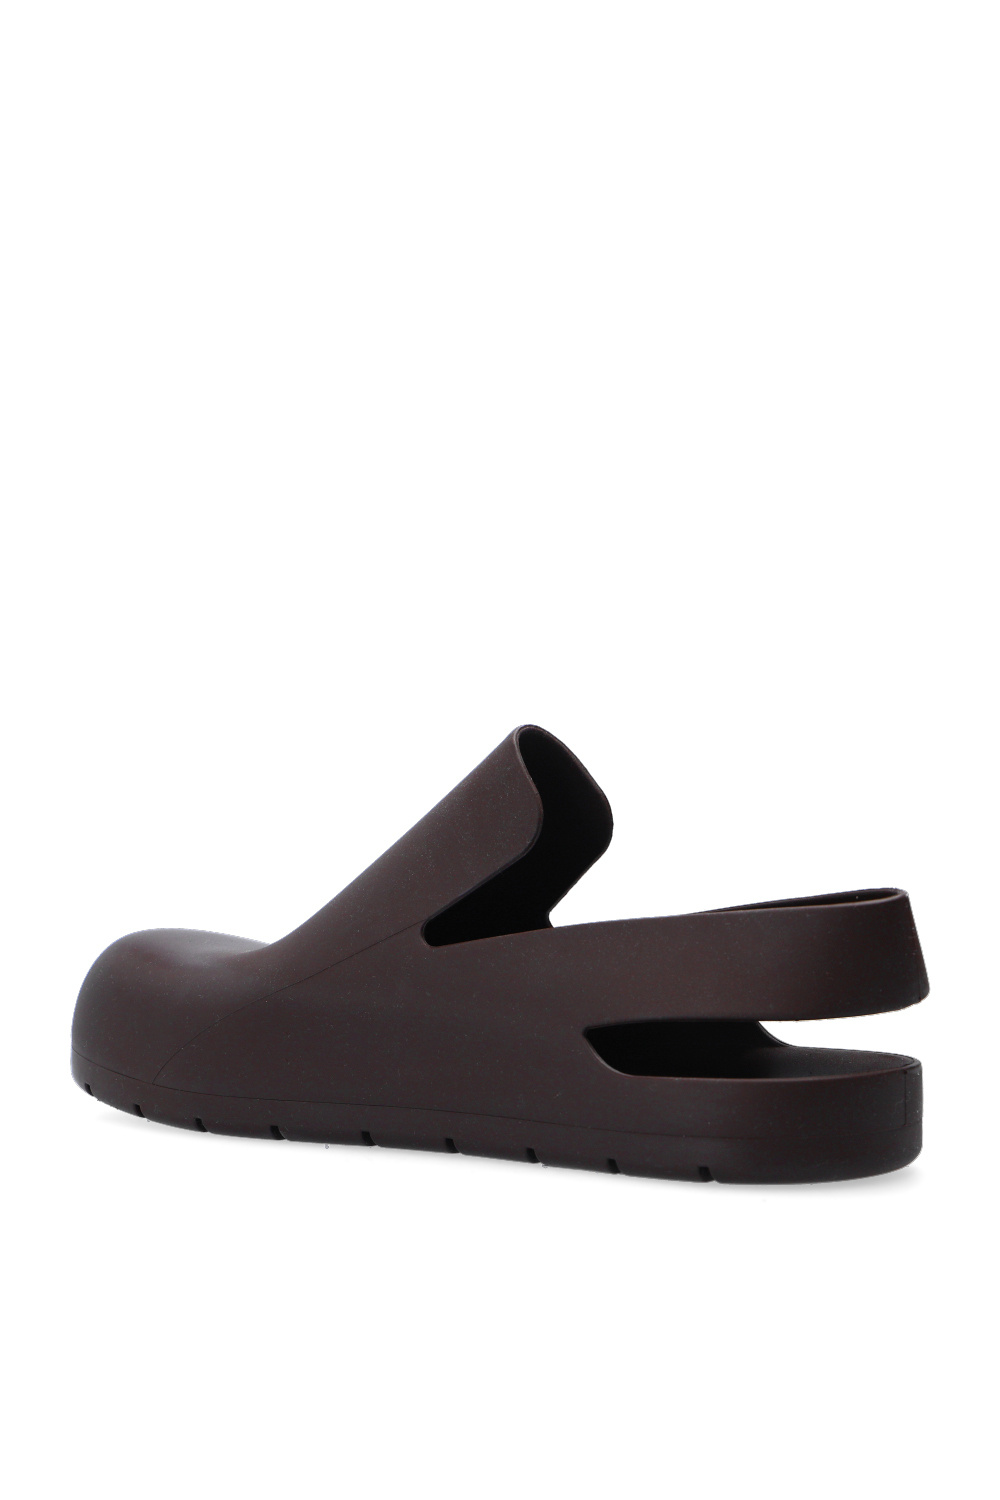 Bottega Veneta Rubber slingback shoes